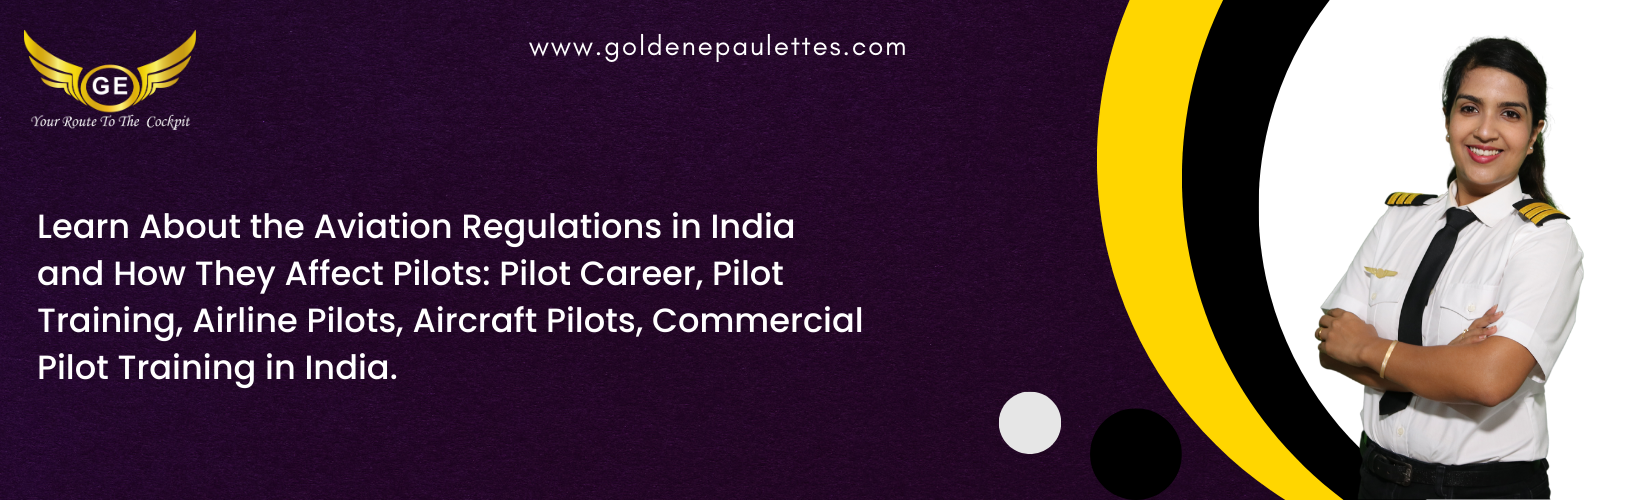 Aviation Regulations in India